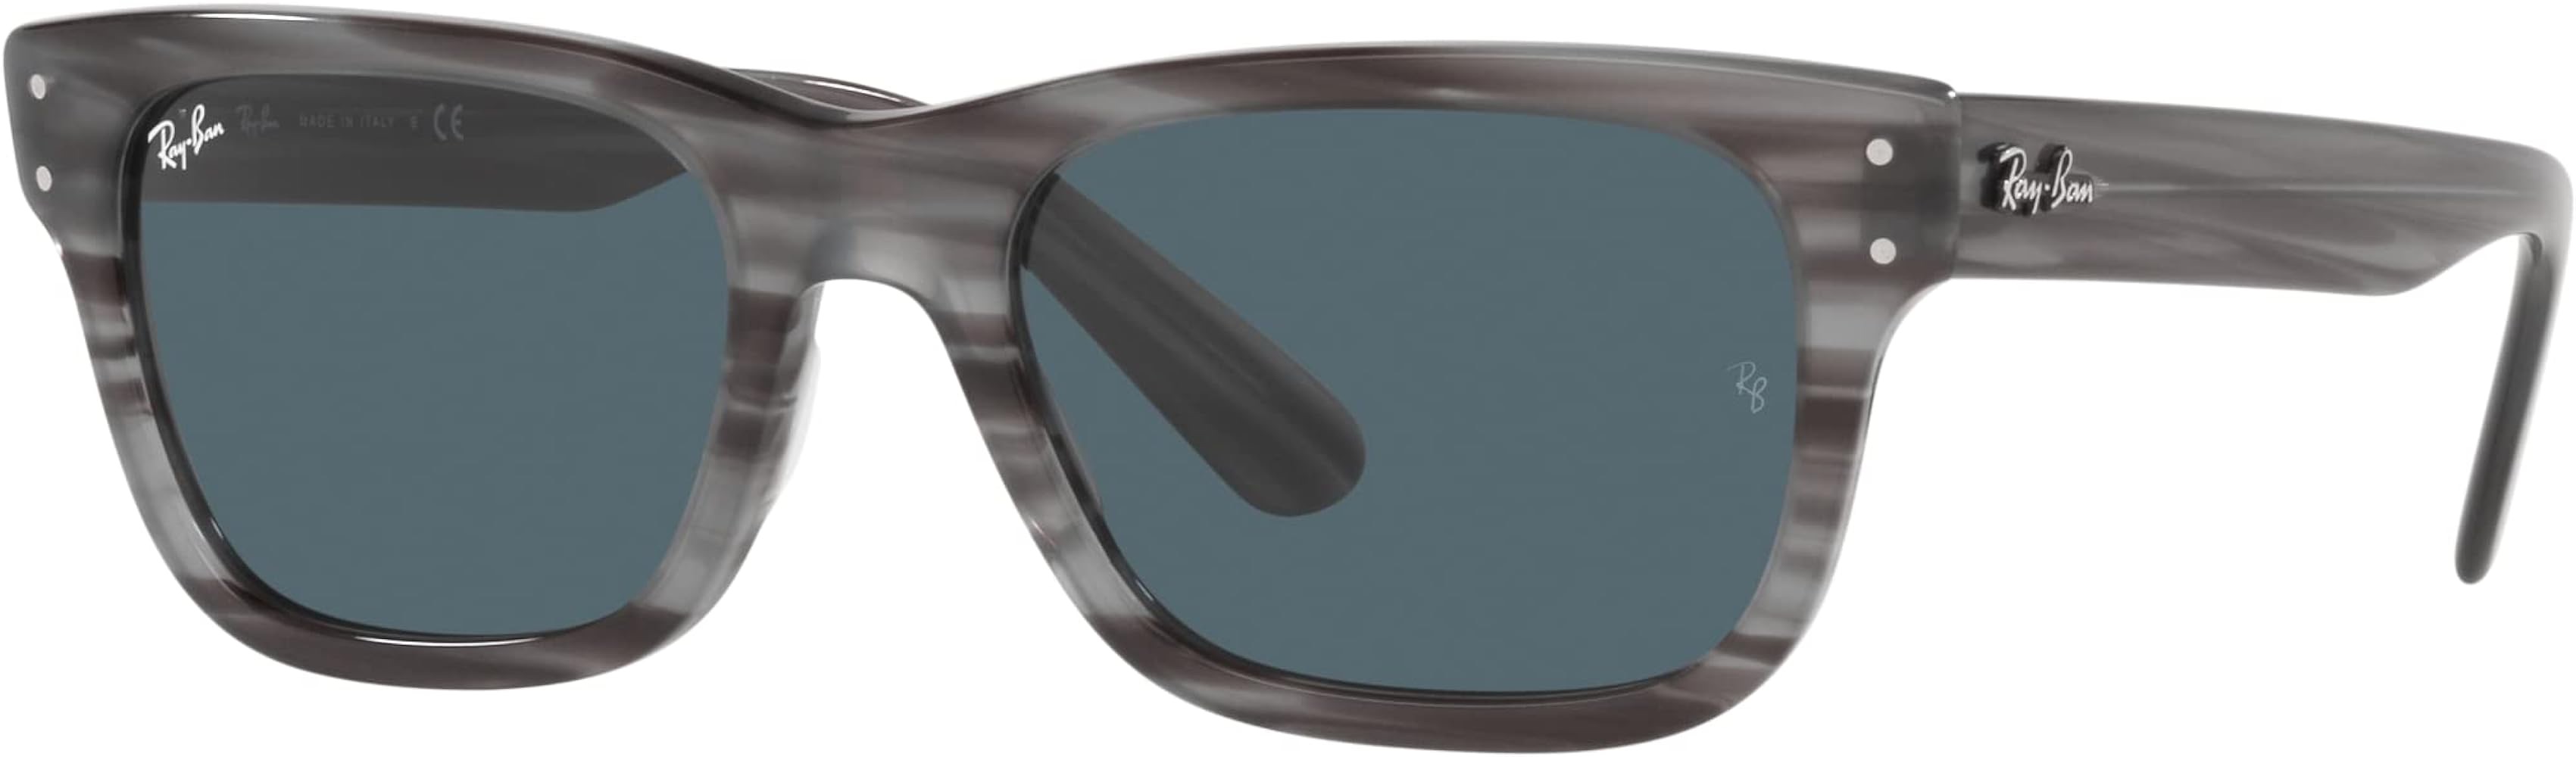 Ray-Ban Men's RB2283 Mr. Burbank Rectangular Sunglasses, Striped Grey/Blue, 55 mm at Amazon Men’s Clothing store